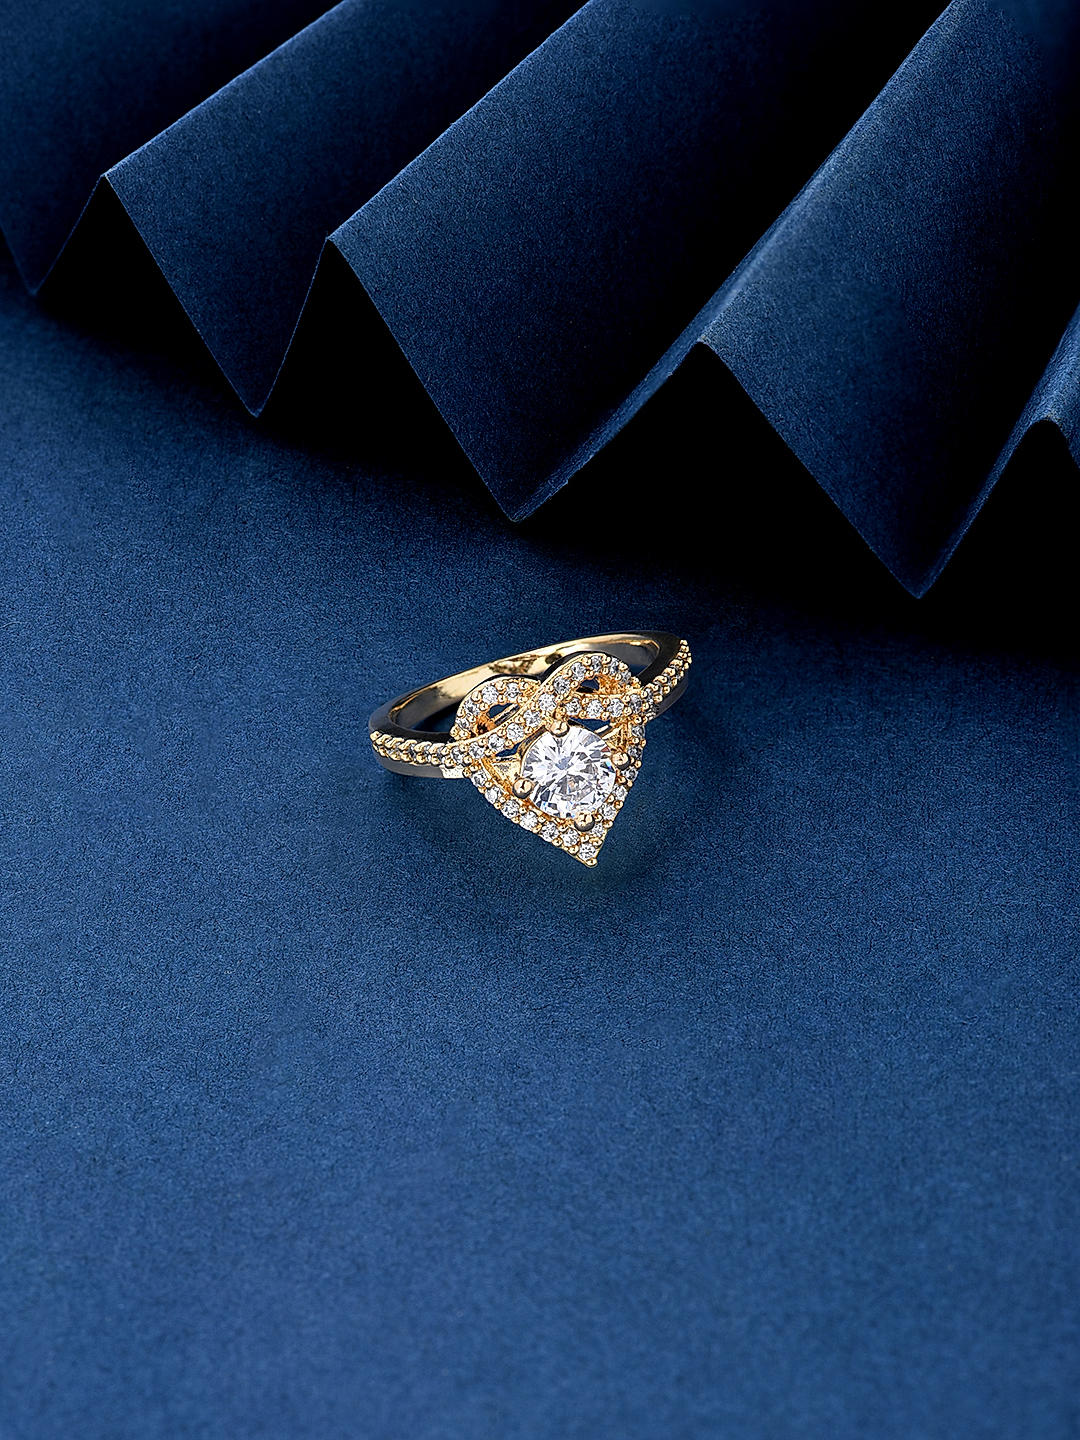 0.70ct Oval Cut Lab Grown Diamond Ring